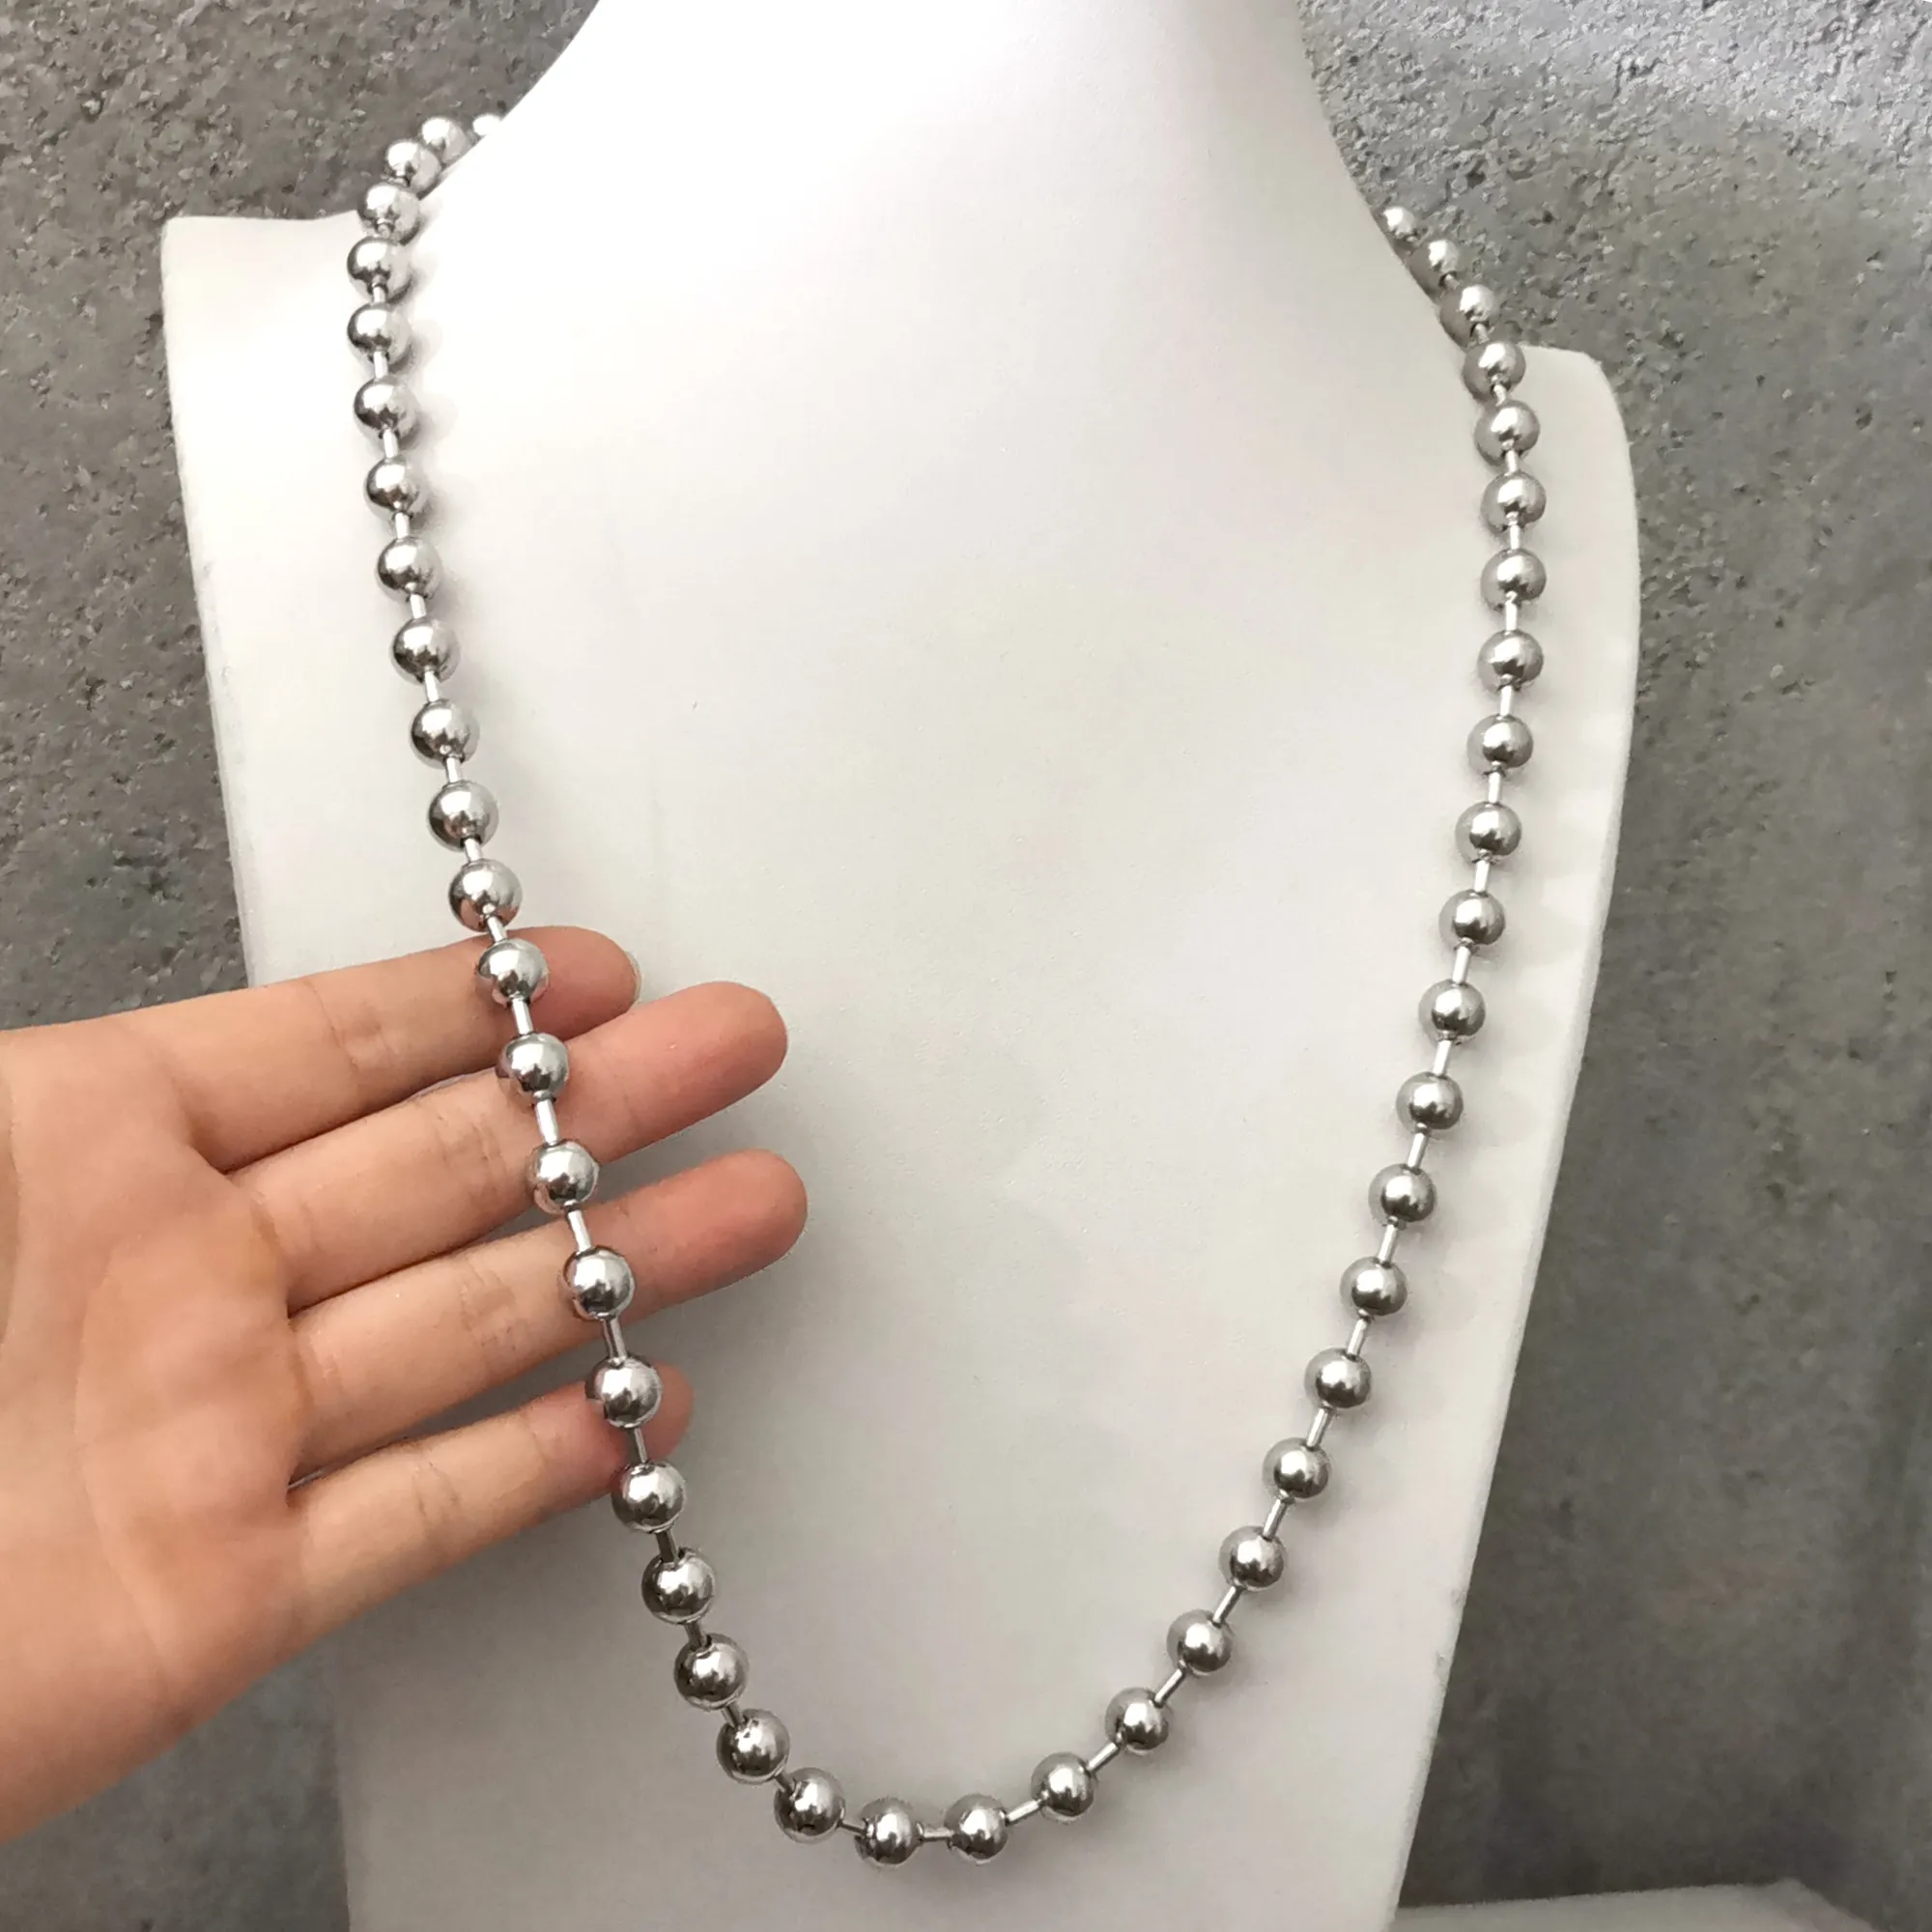 Wholesale 1.5-12mm Black Stainless Steel Bead Ball Chain Necklace Men Women  | eBay